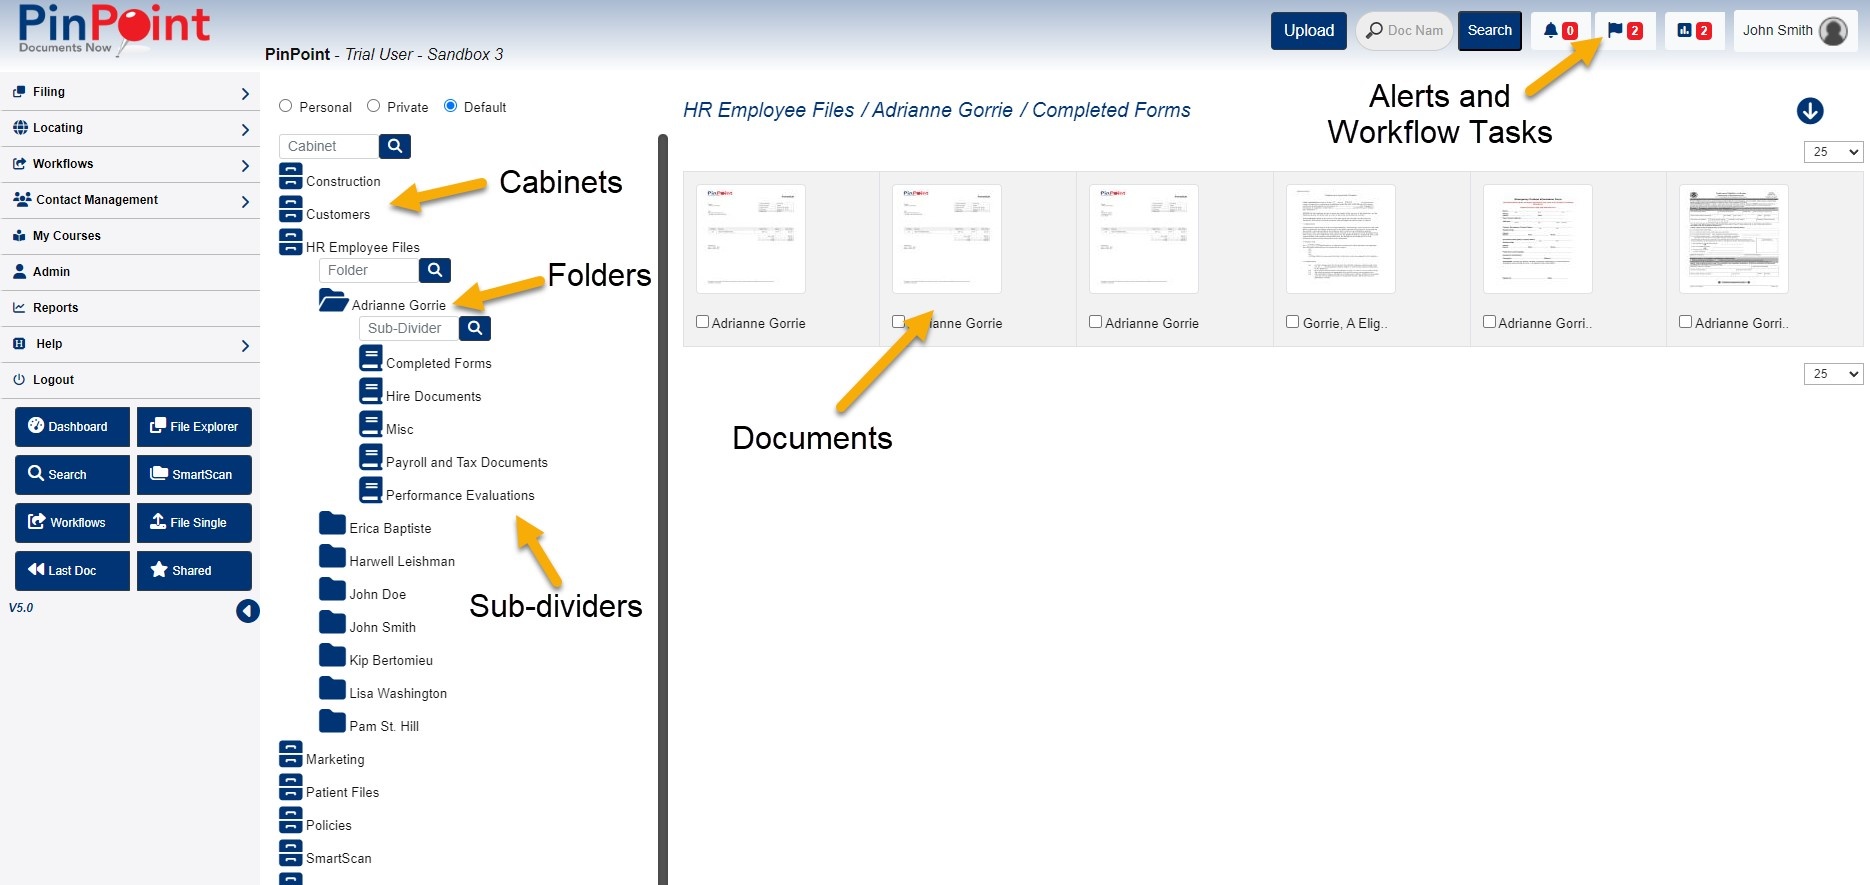 Content - PinPoint Document Management Software